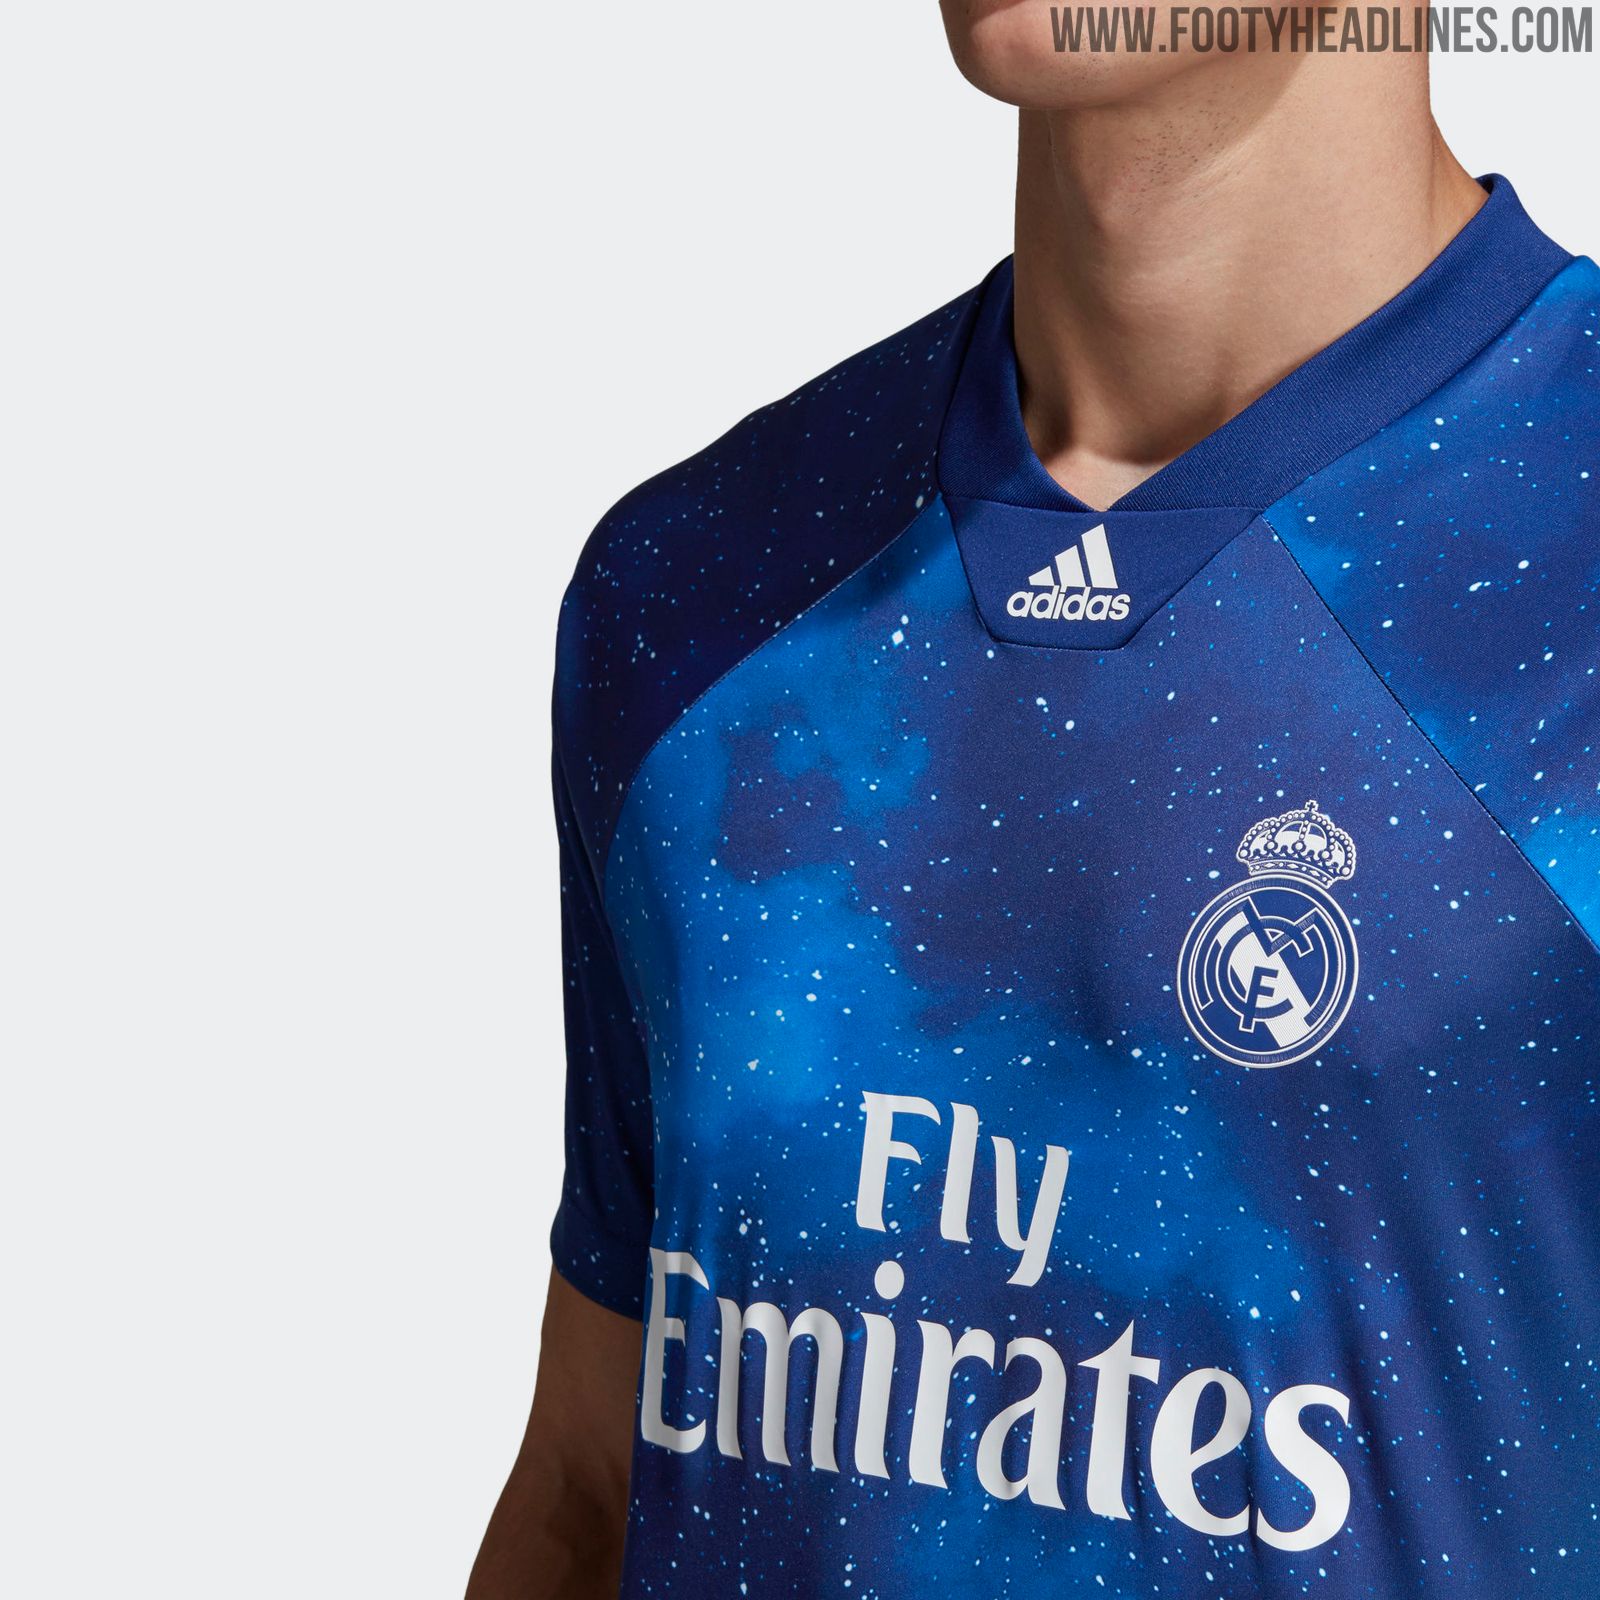 Outstanding Adidas x EA Sports Real Madrid Kit Released Headlines